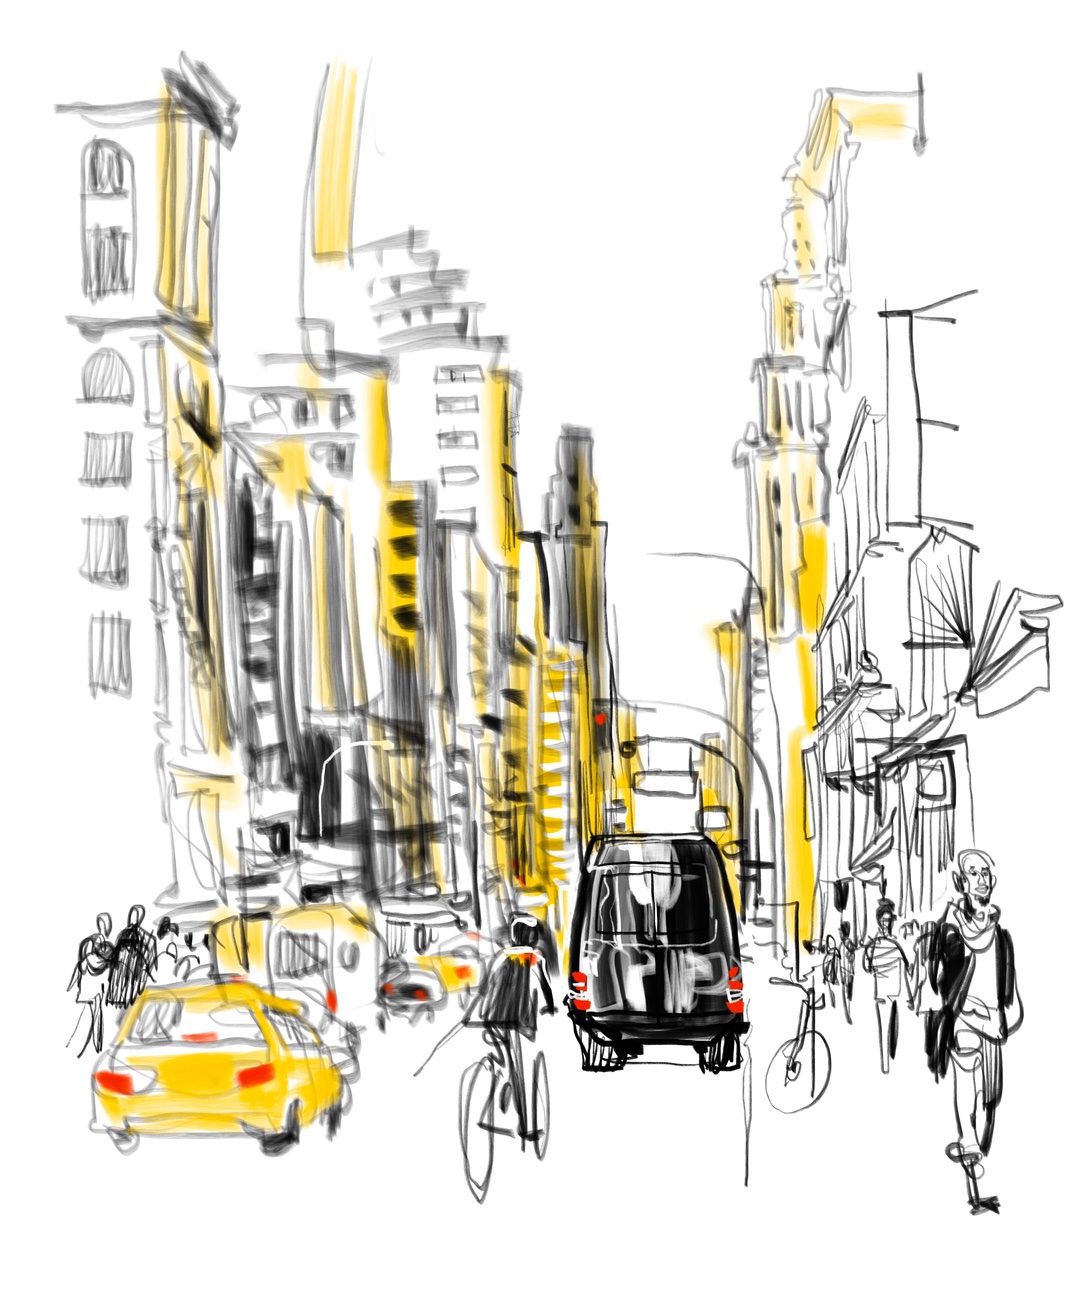 2018-NYC-12-Broadway_Sketcherman.jpg